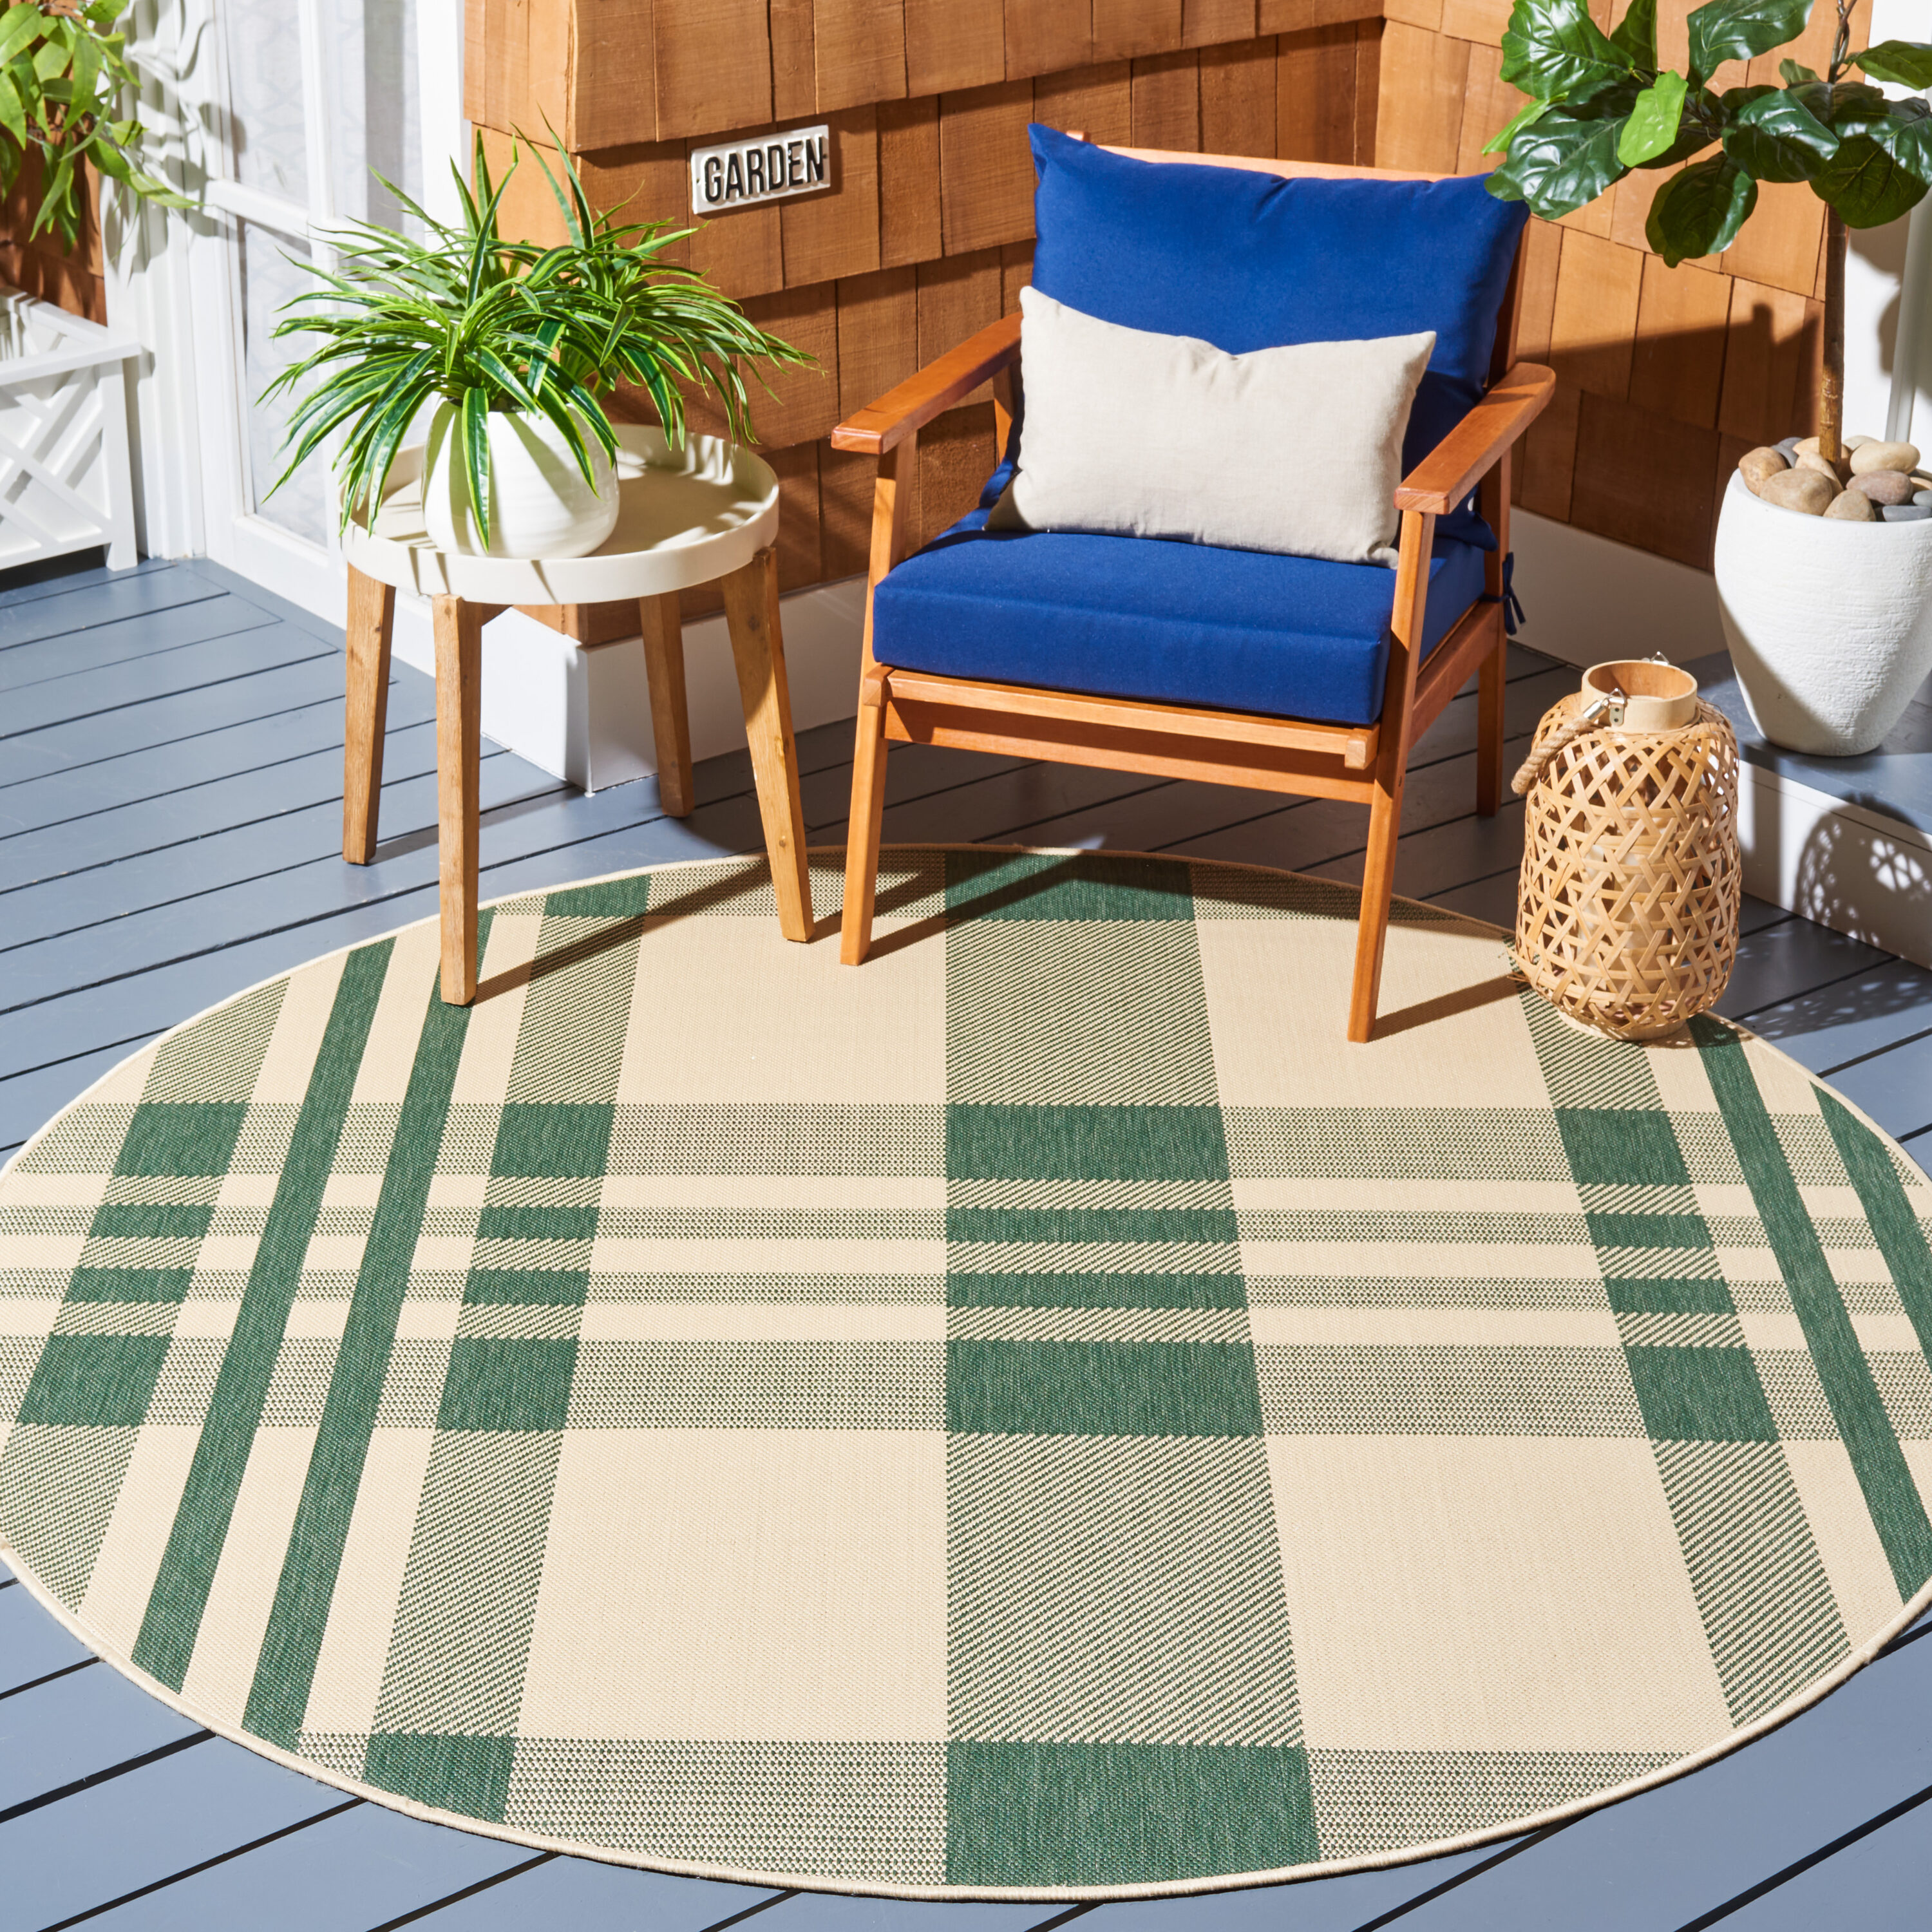 Black & Bone Plaid Outdoor Rug - Safavieh.com  Outdoor rugs, Outdoor rugs  patio, Front porch decorating